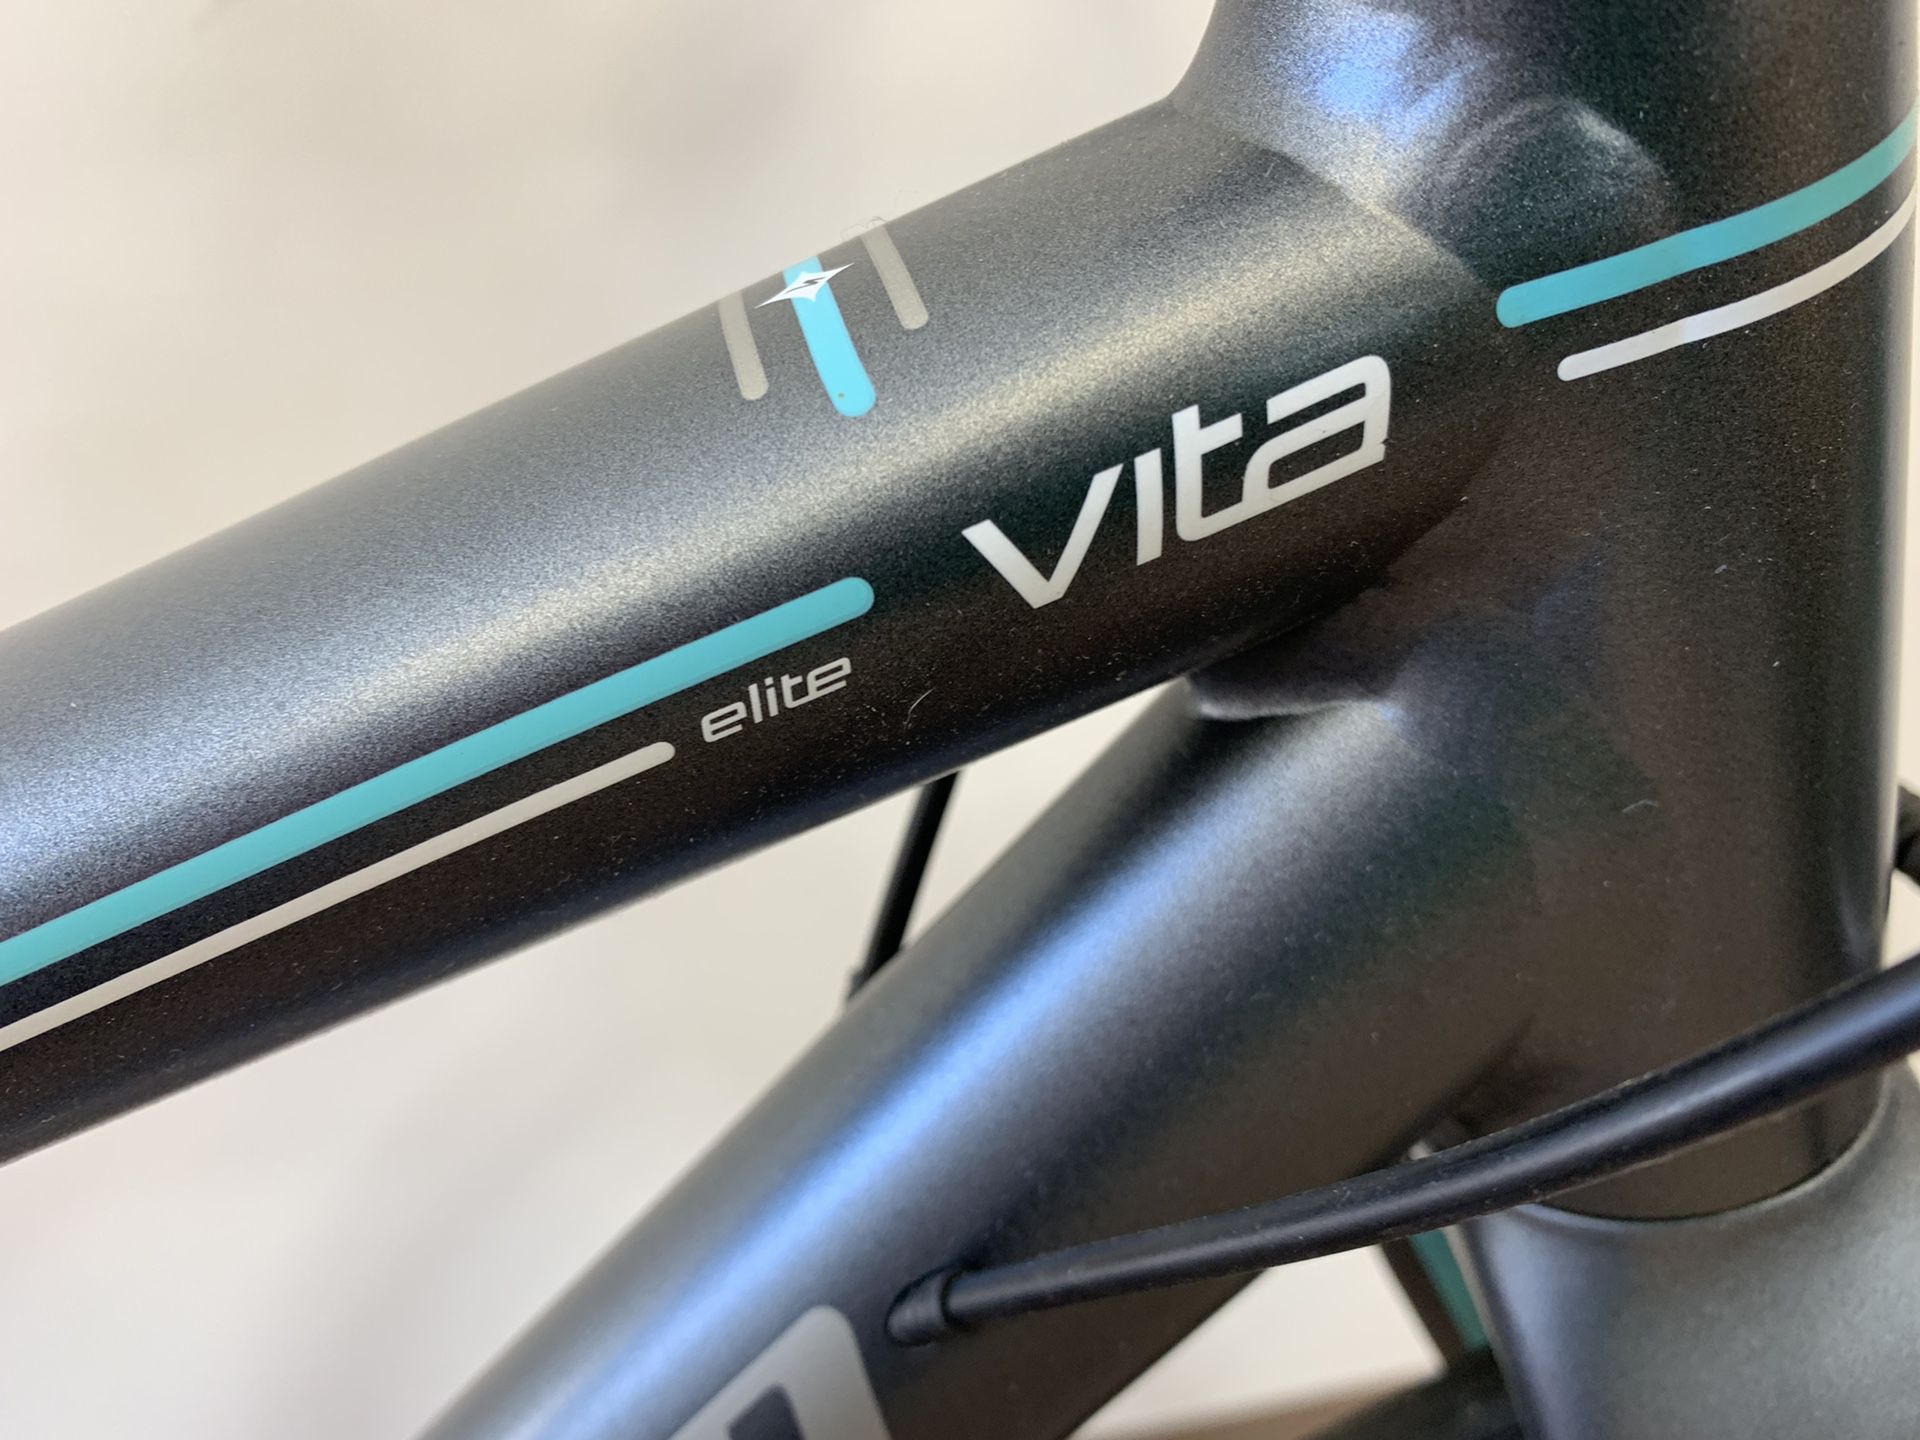 Vita specialized elite bike